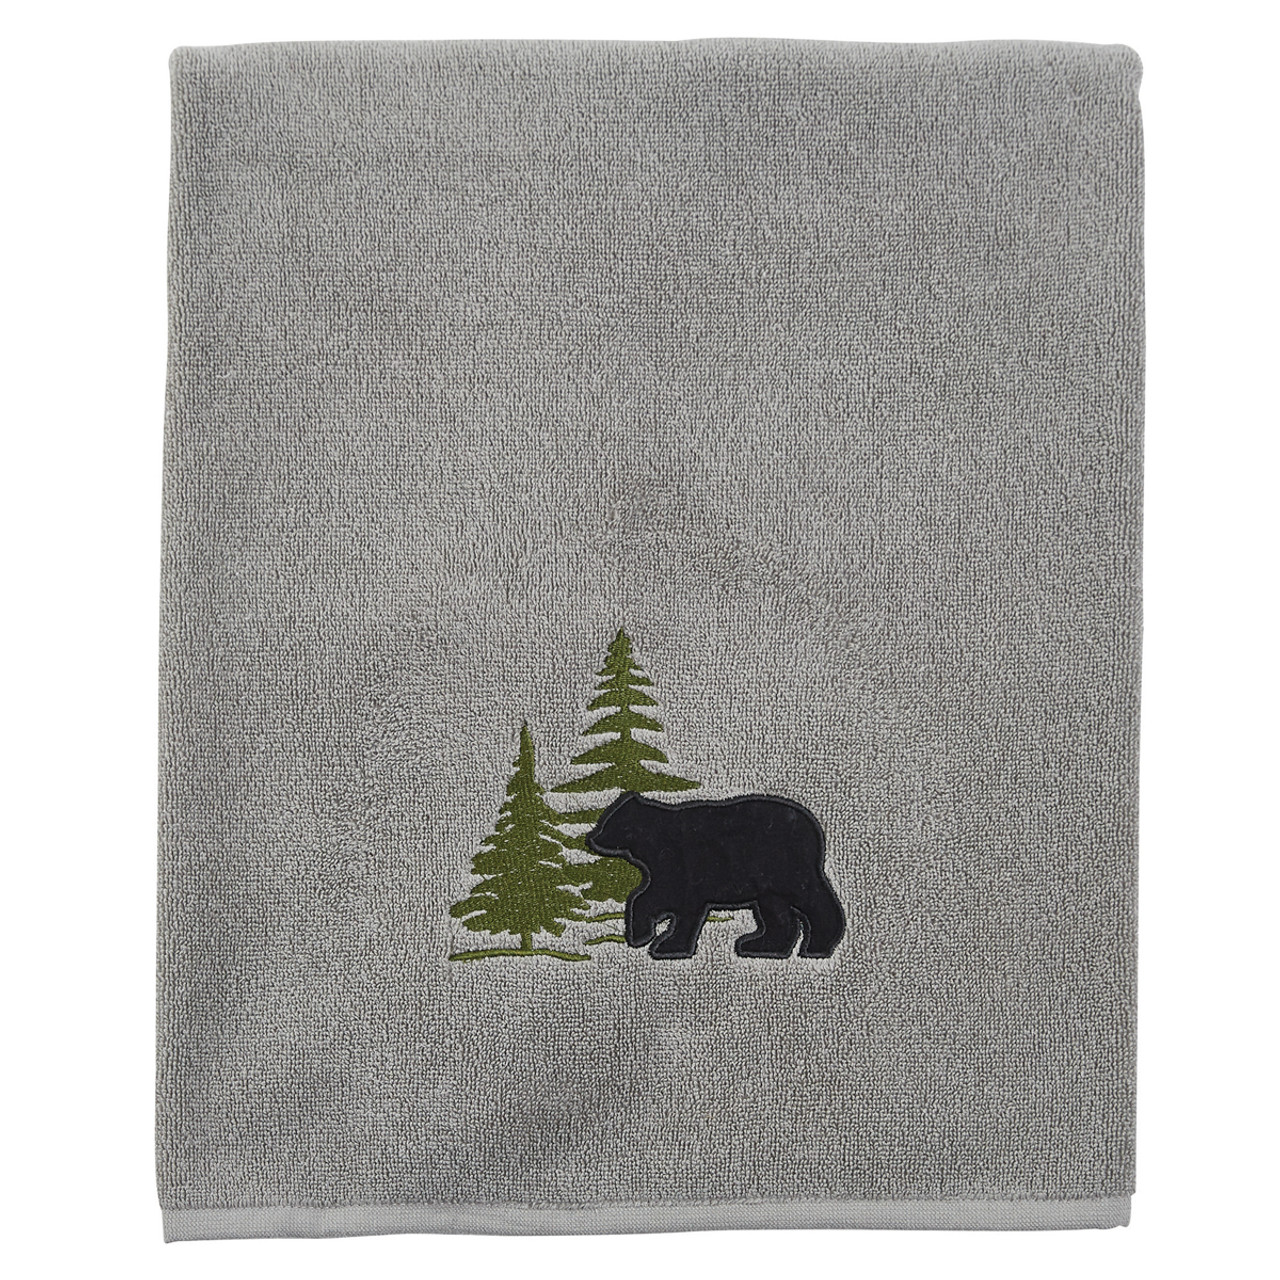 Black Bear Bath Terry Towel - Mountain Hardware and Sports